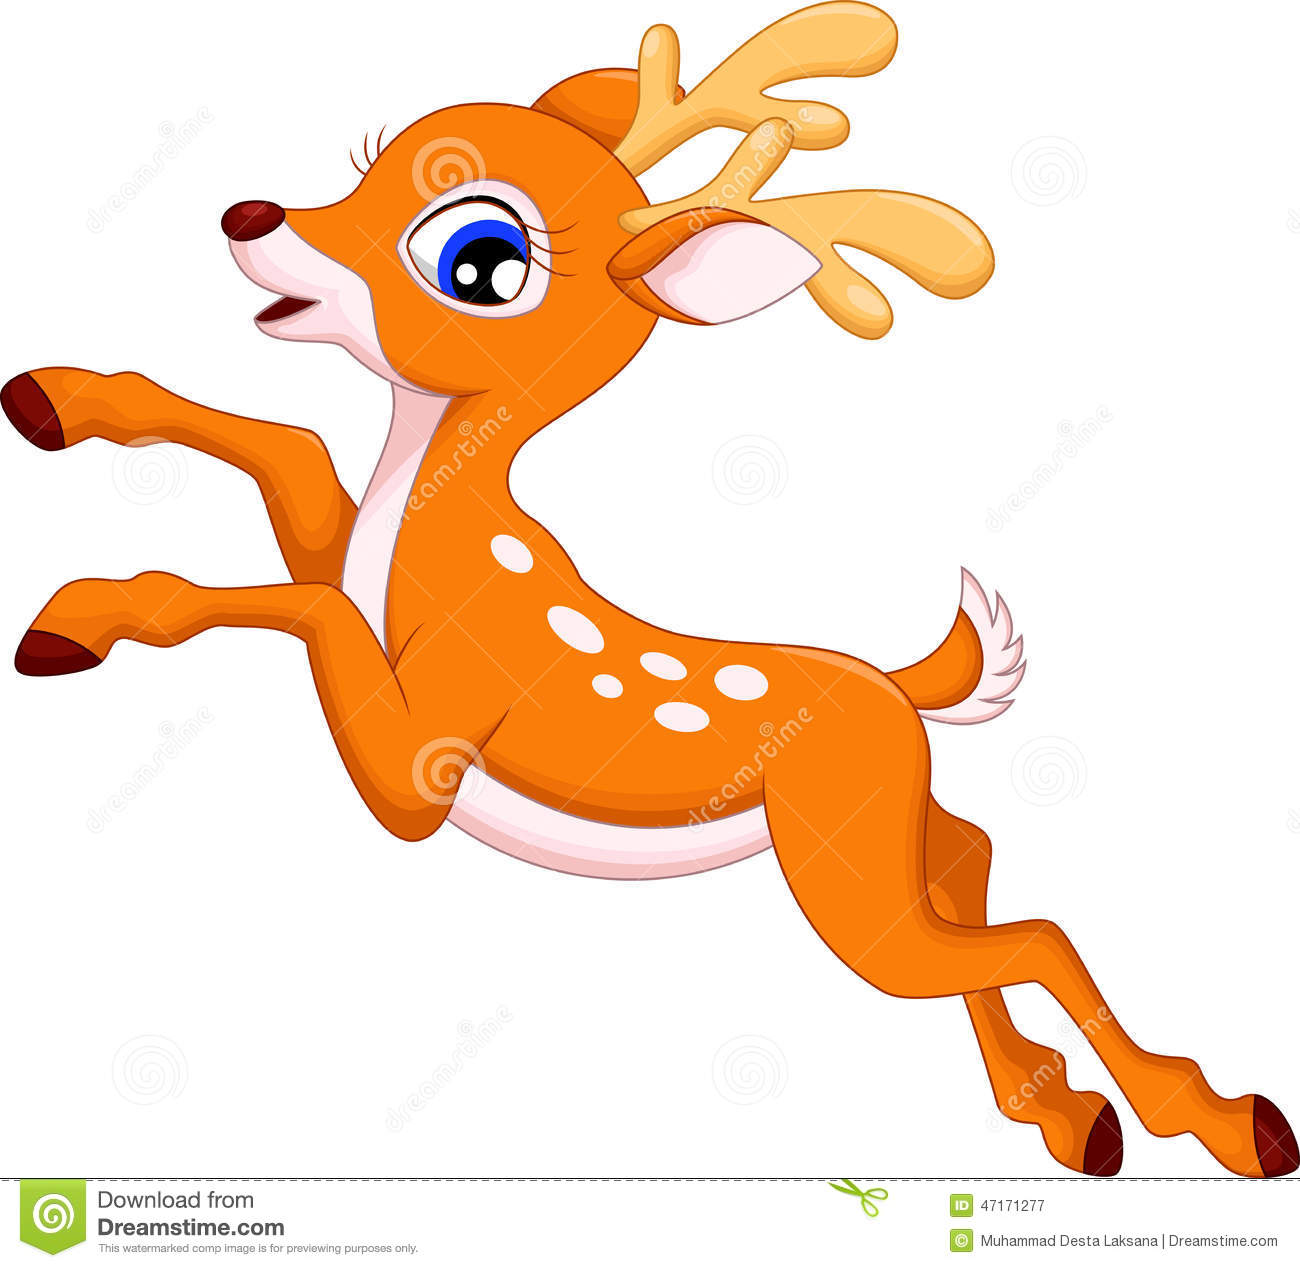 Cute Deer Cartoon Stock Illustration   Image  47171277